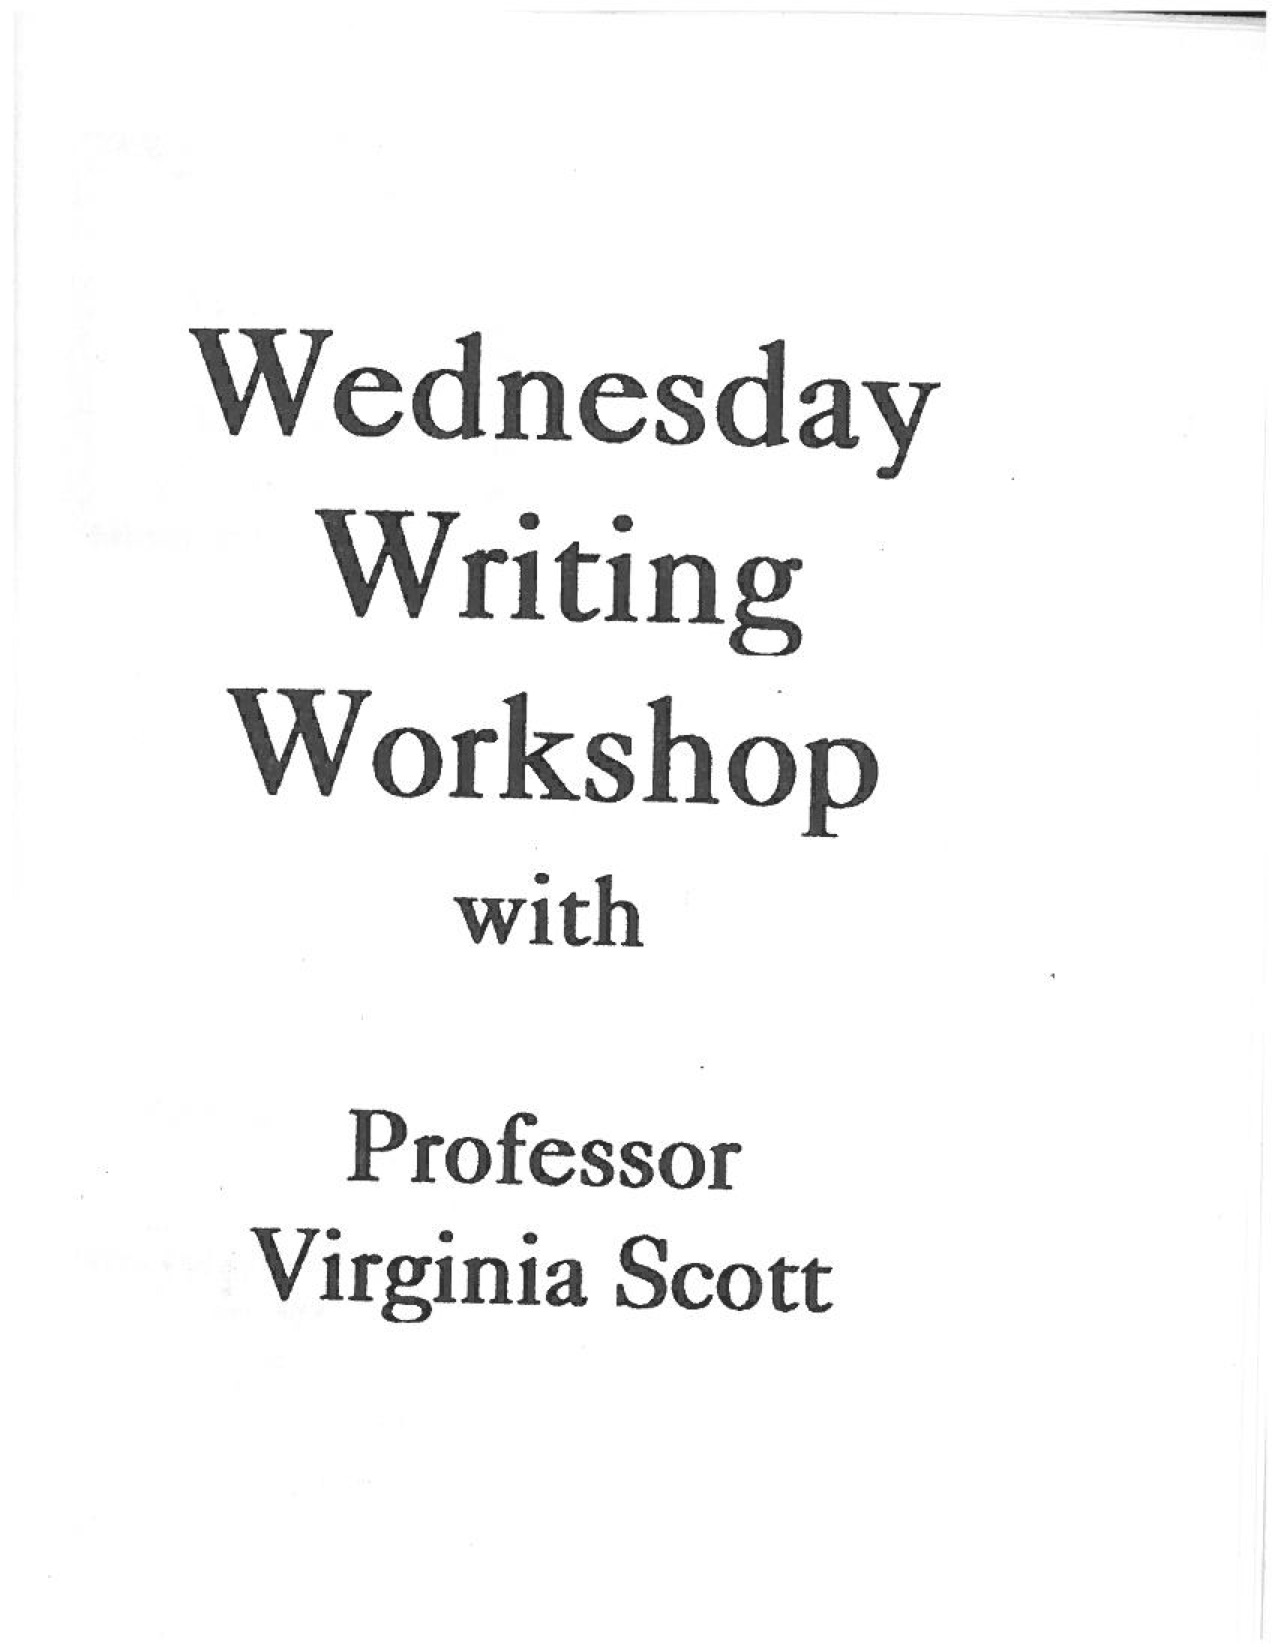 Wednesday Writing Workshop with Professor Virginia Scott